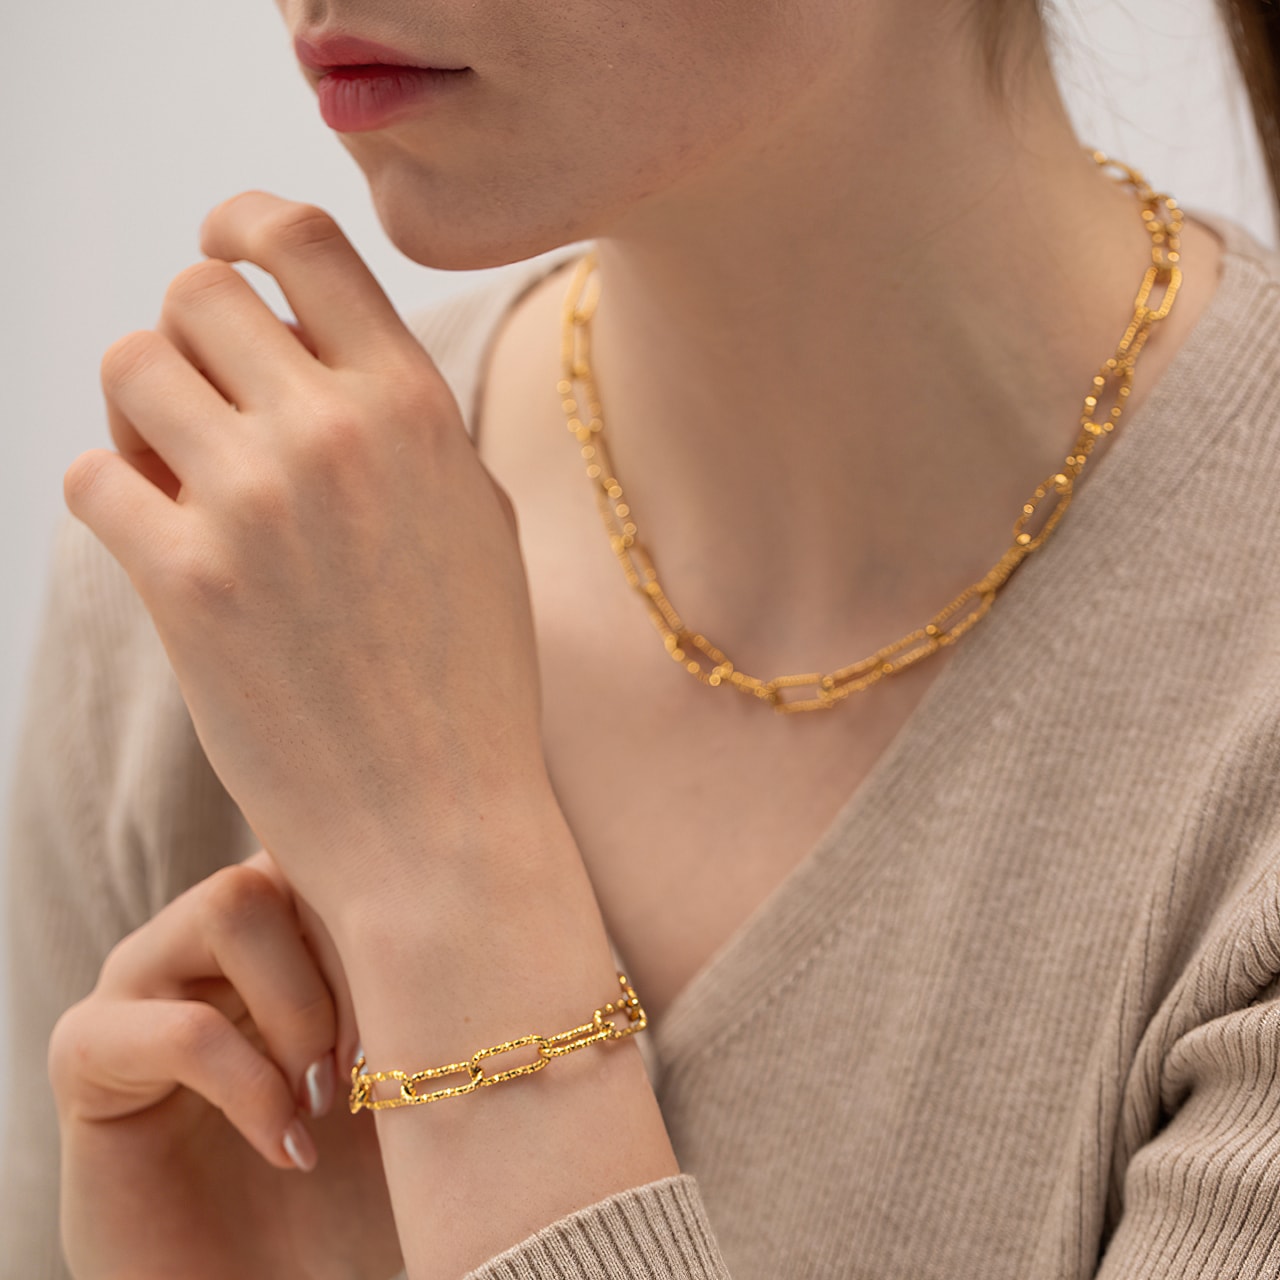 18K Gold-Plated Embossed Paperclip Bracelets - CHLOE